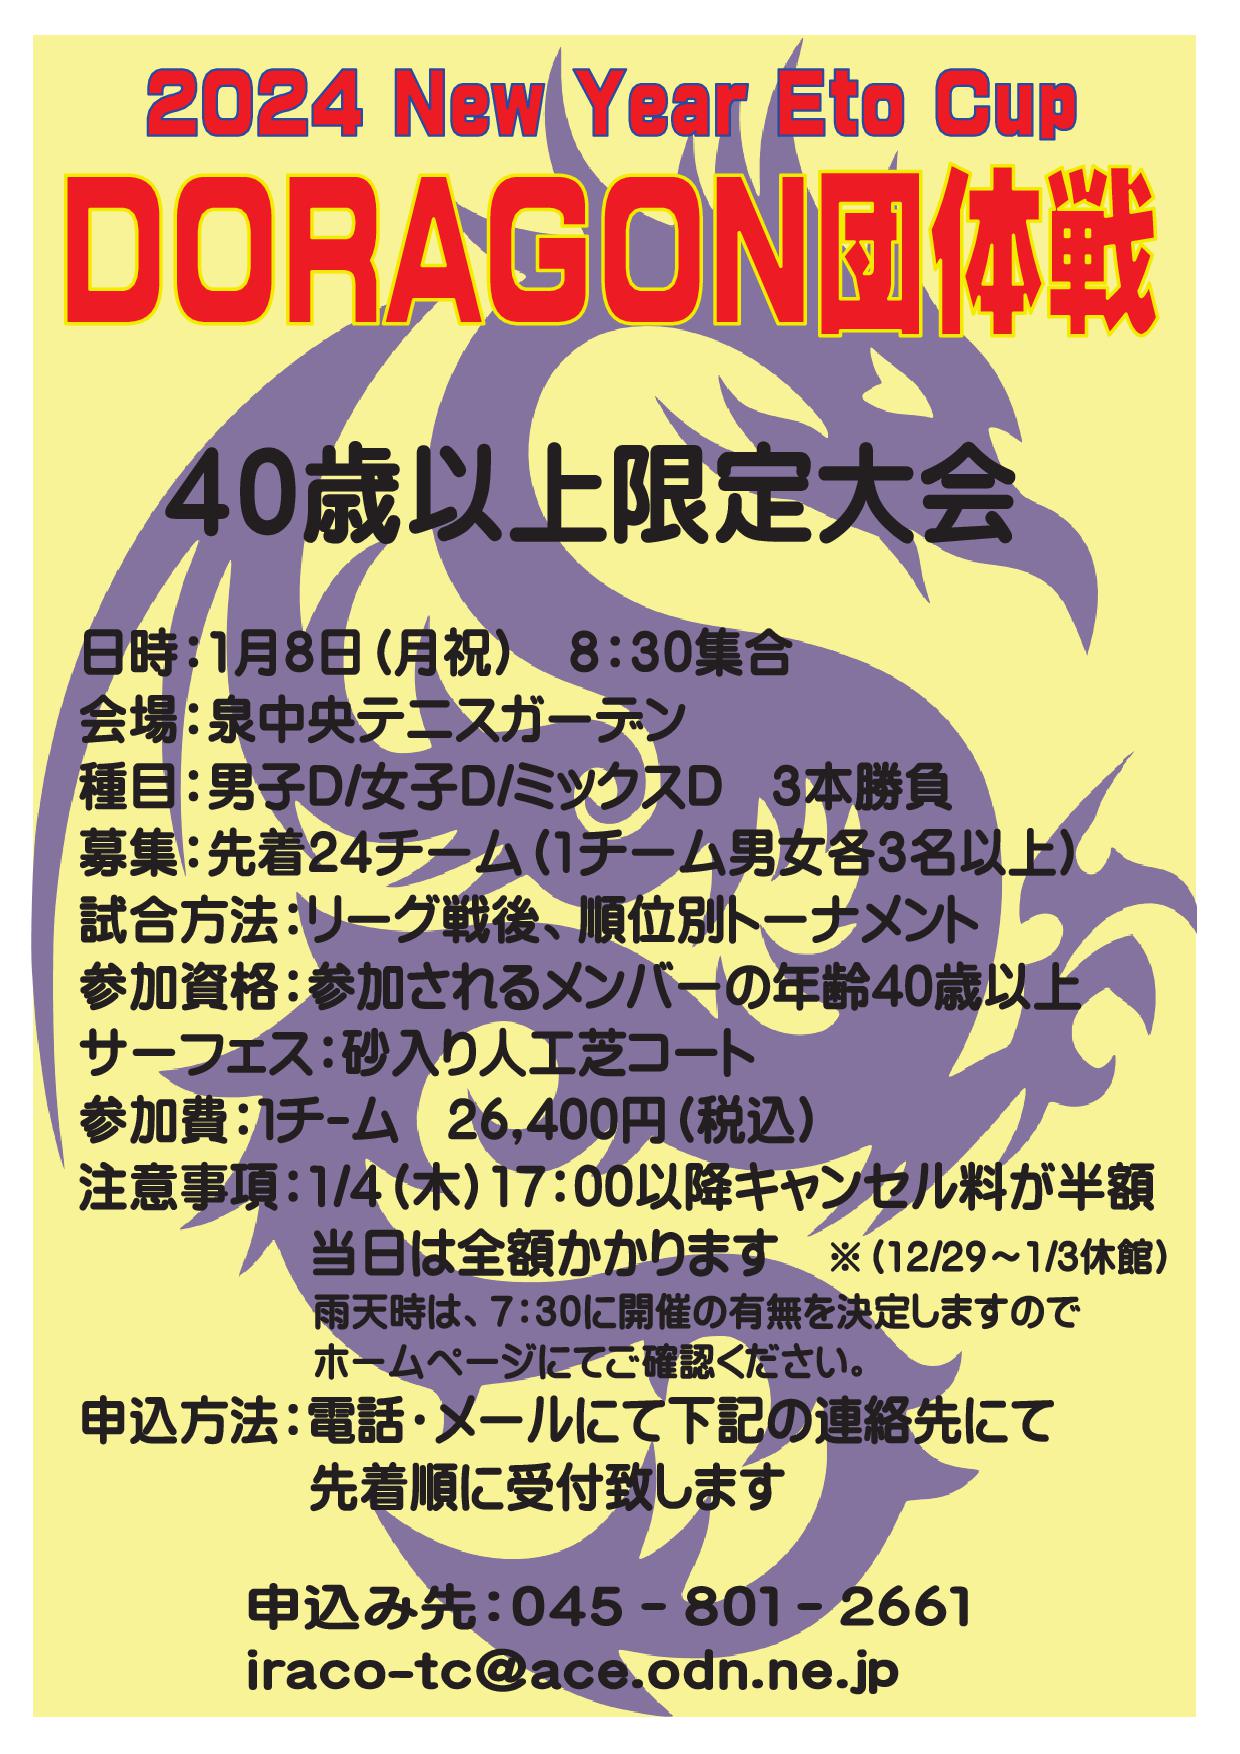 20240108 - 2024/1/8(月祝) New Year eto CAP 「DORAGON団体戦」